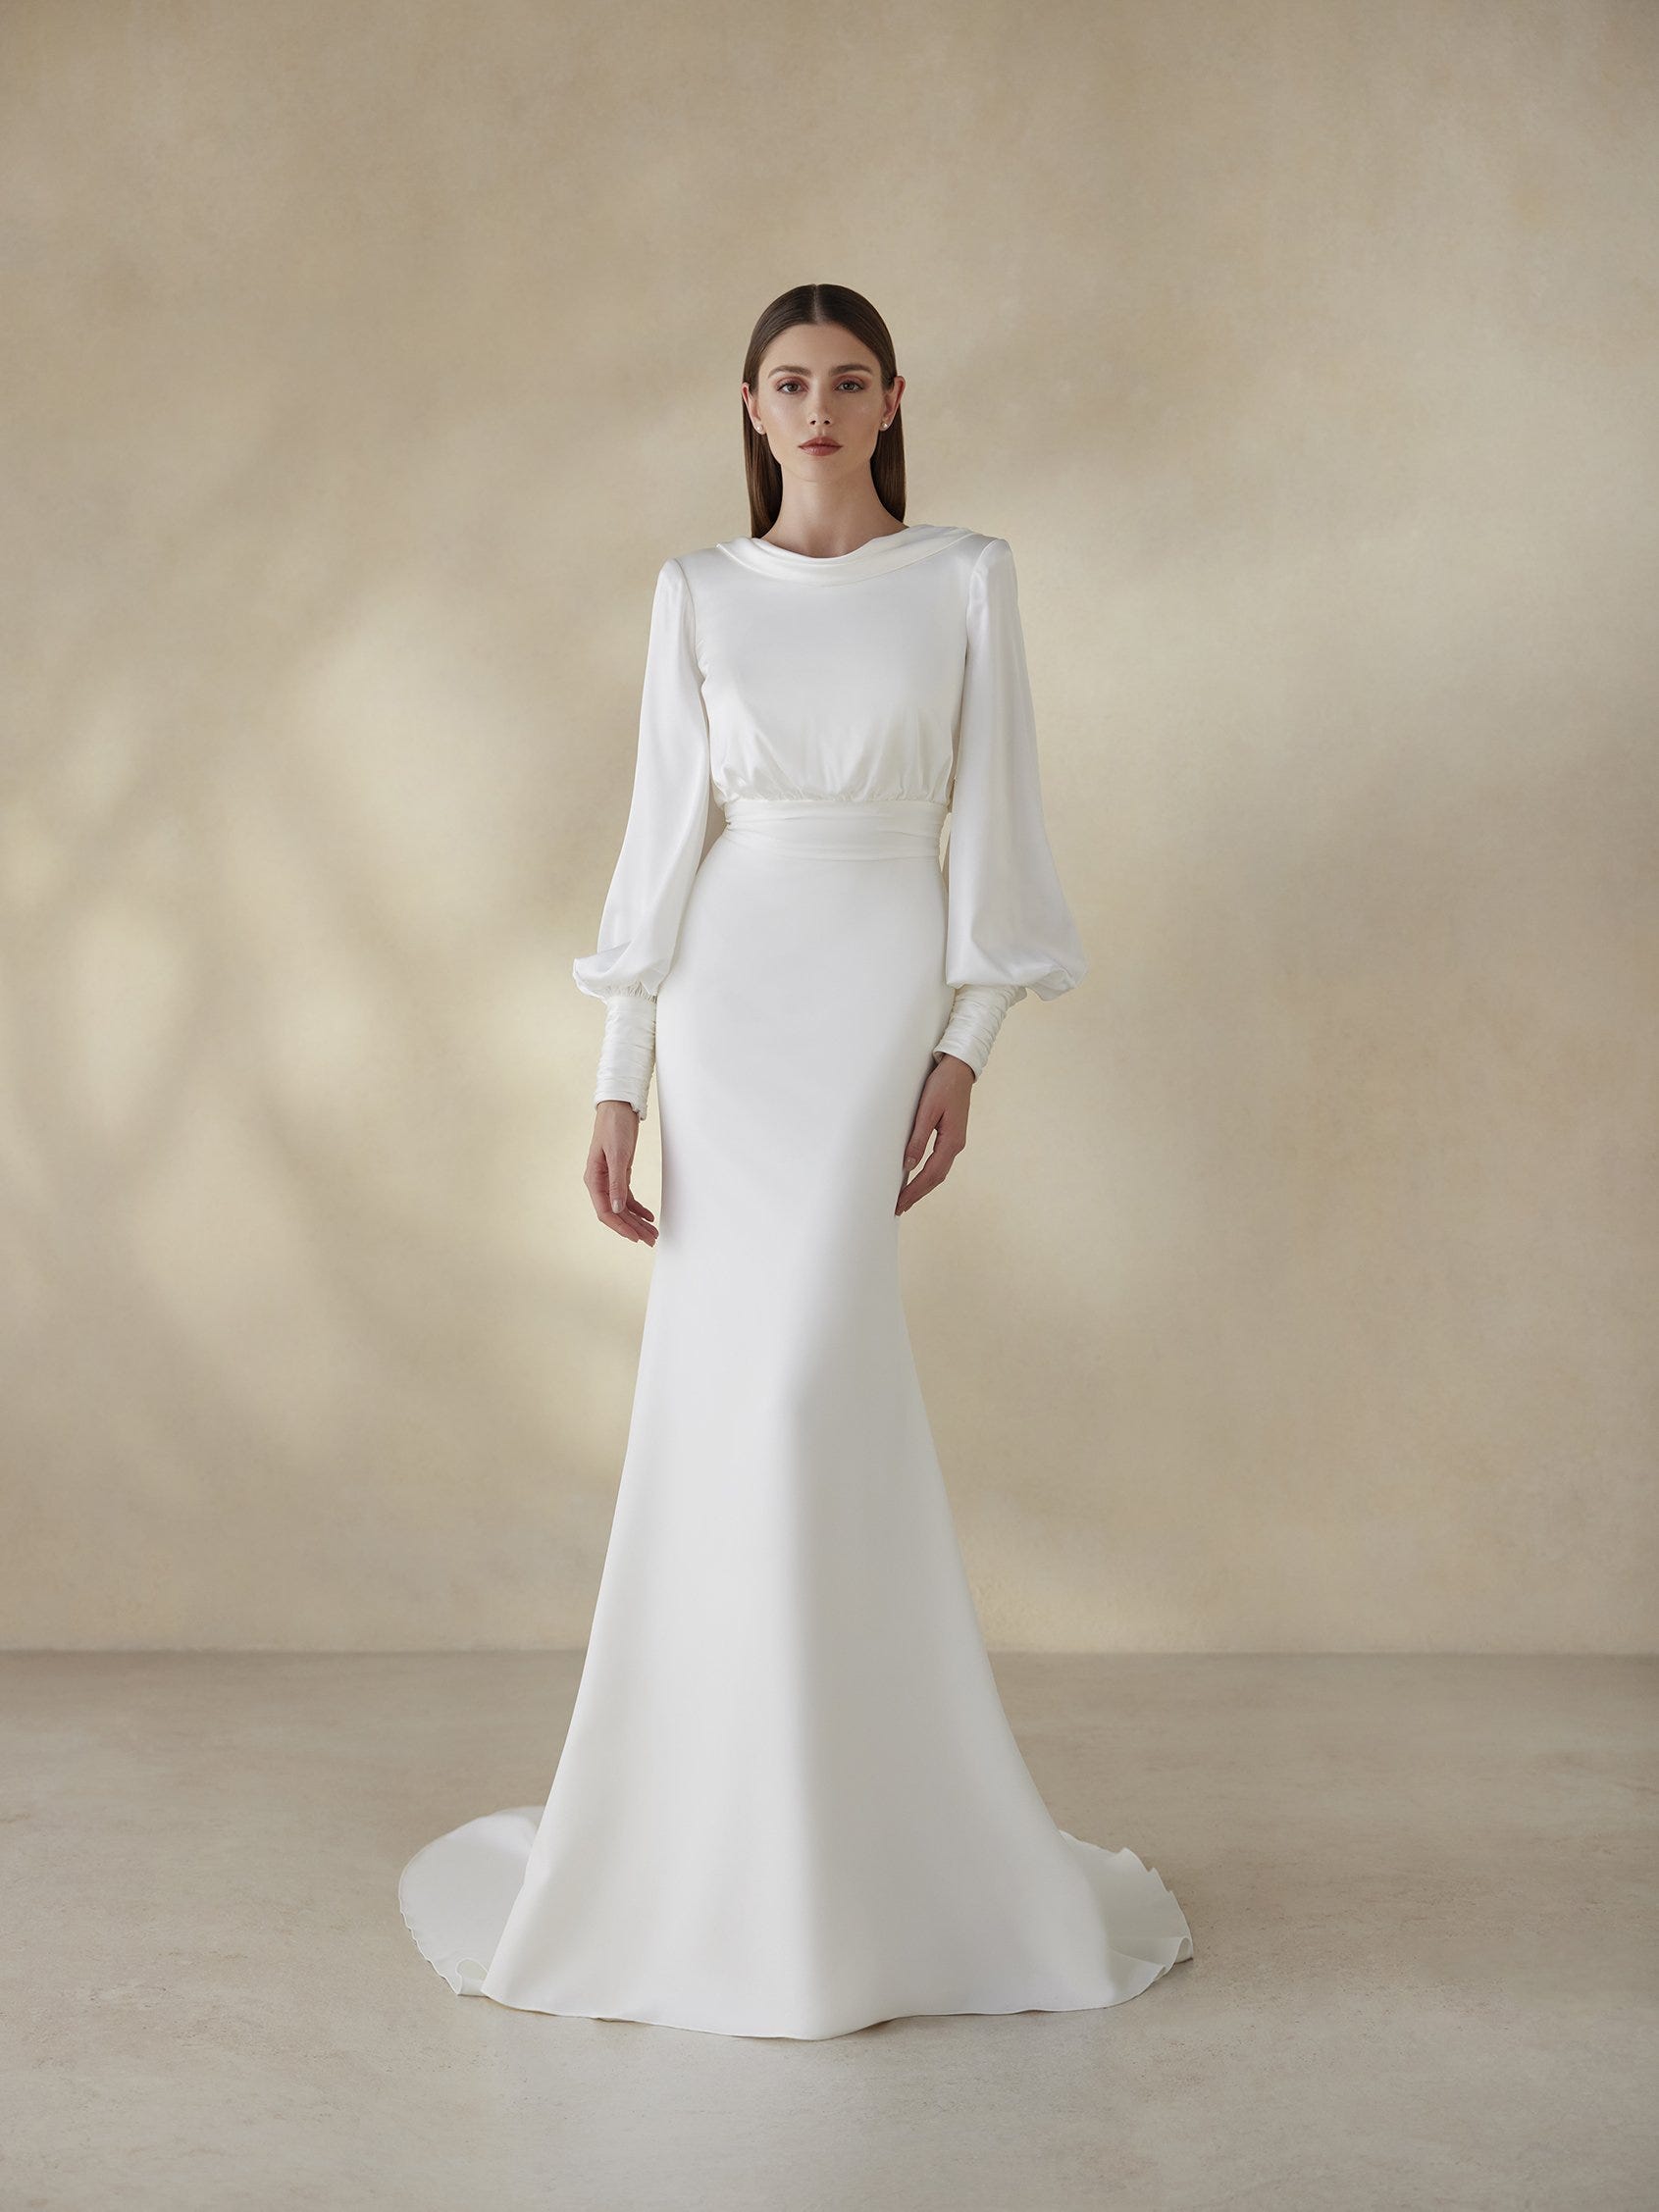 Short Wedding Dresses: The 27 Best Gowns + Faqs